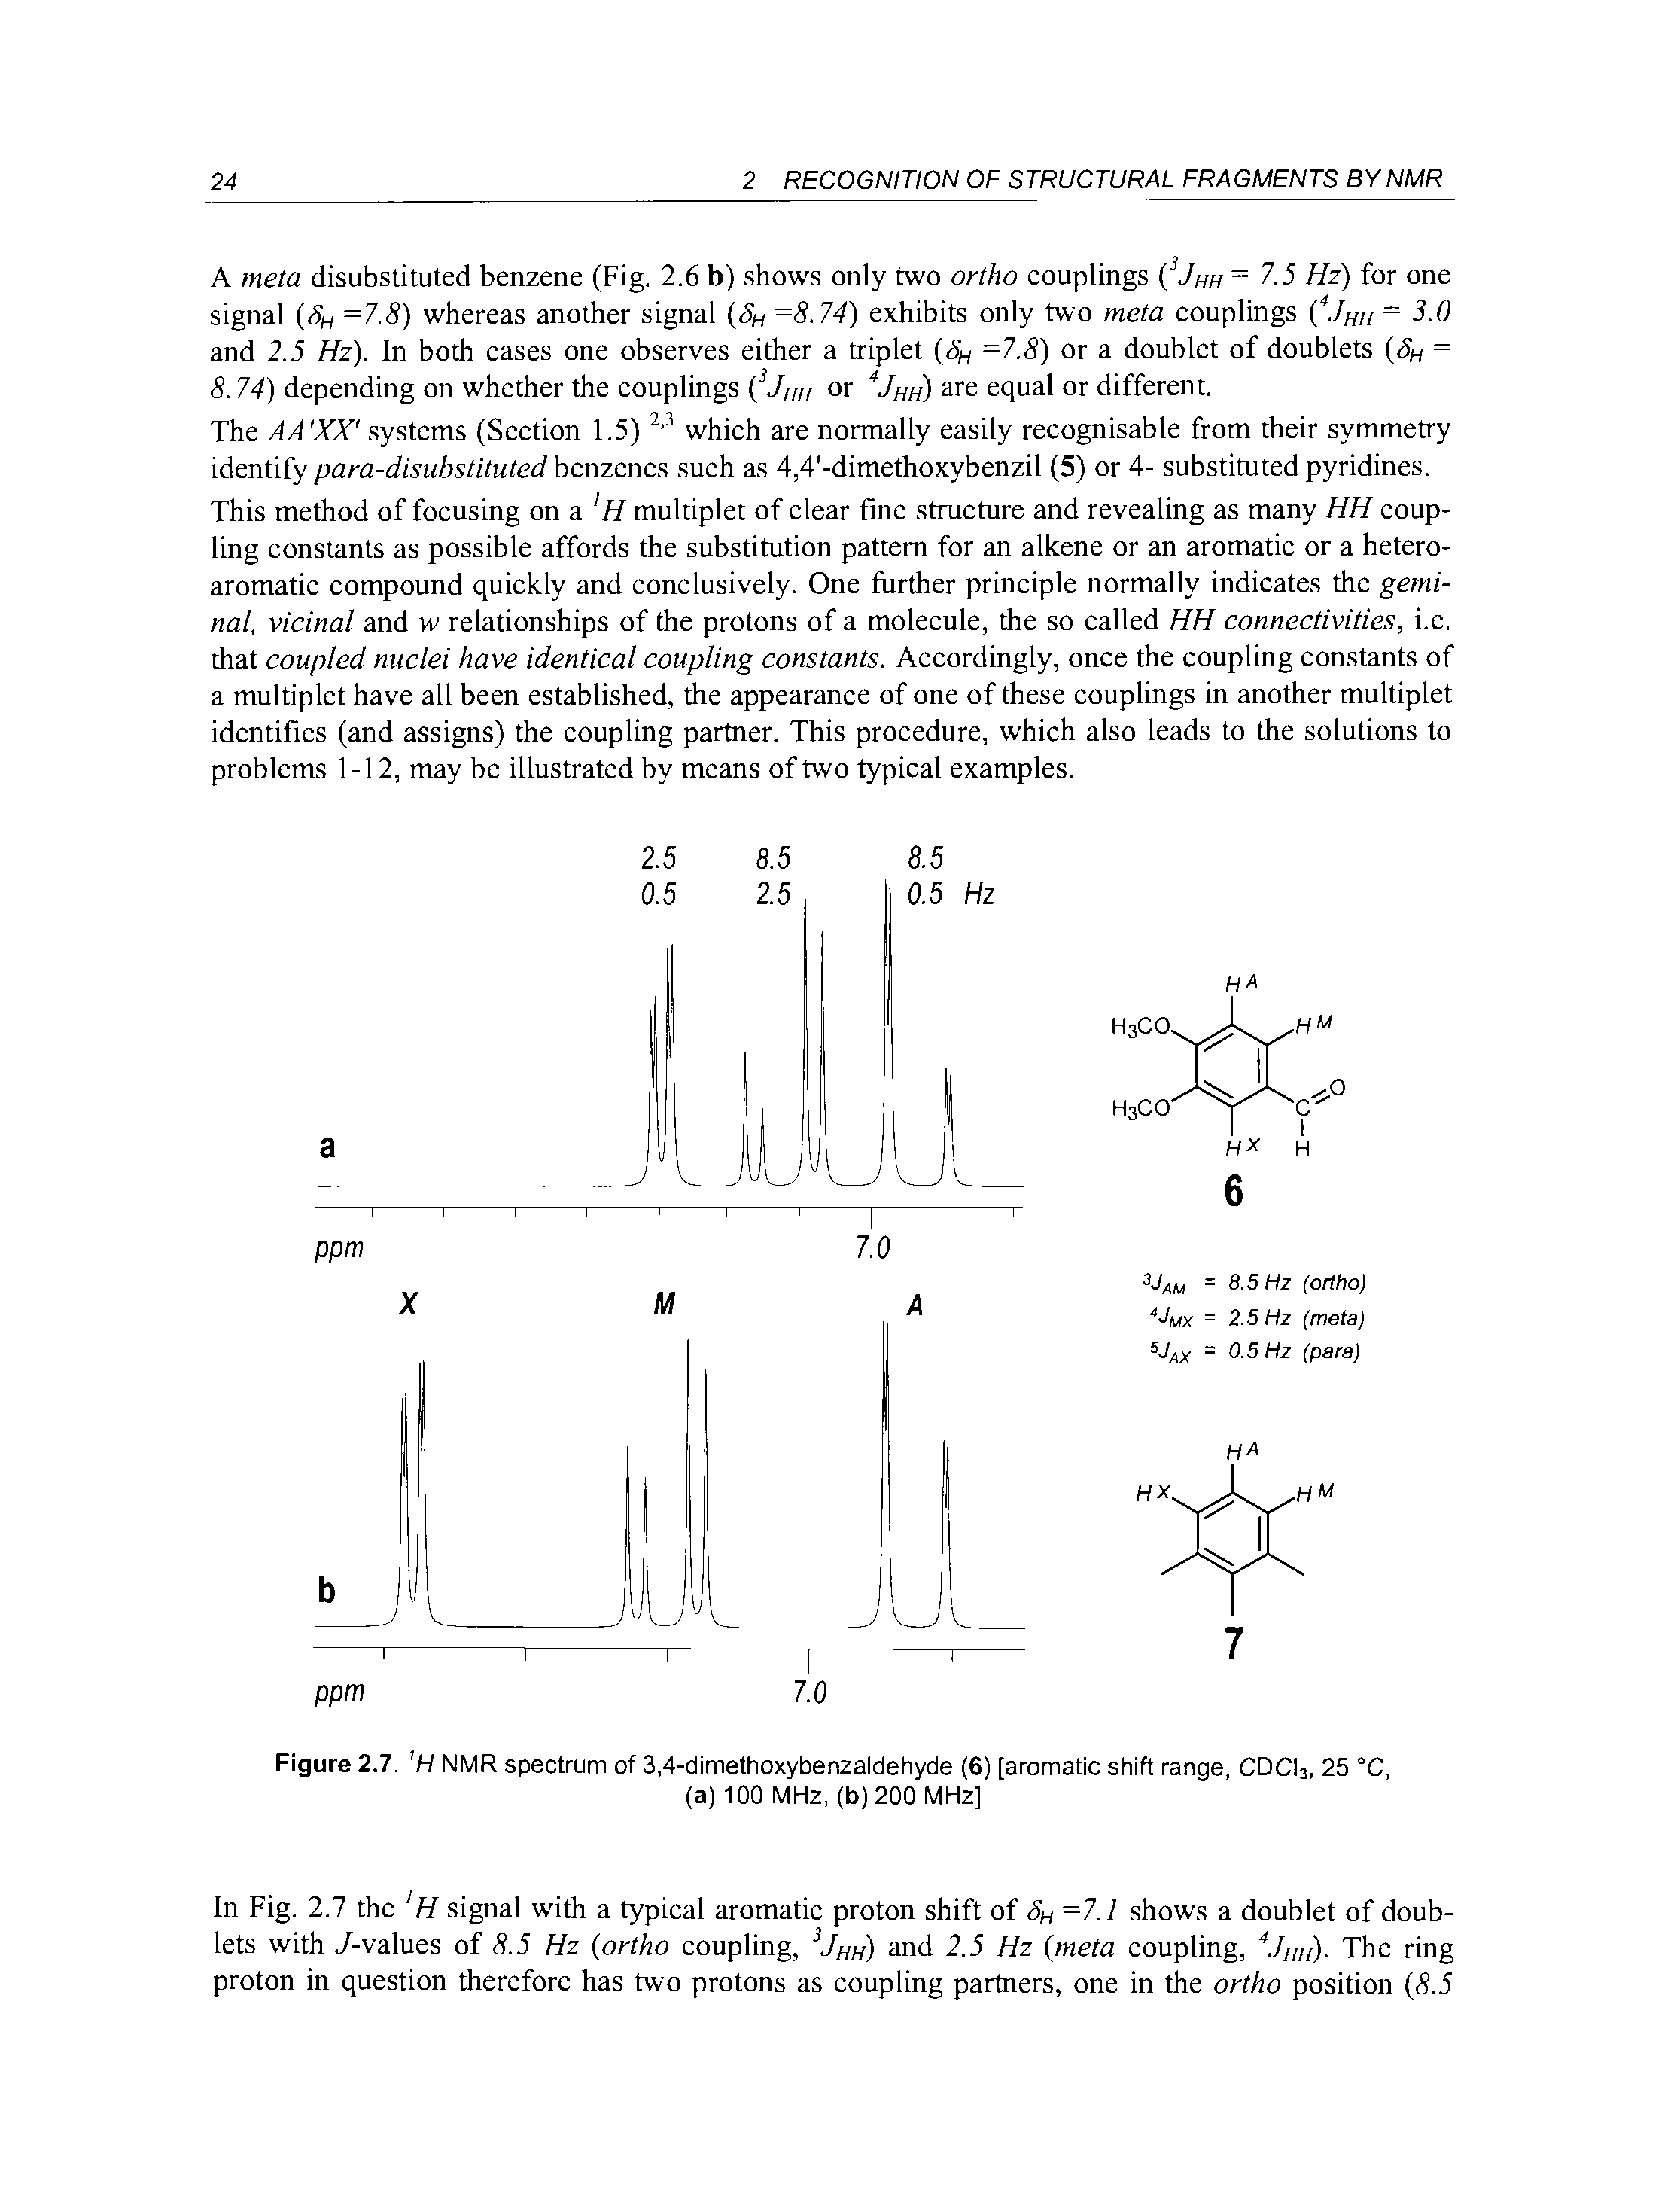 Figure 2.7. H NMR spectrum of 3,4-dimethoxyben2aldehyde (6) [aromatic shift range, CDCI3, 25 °C,...